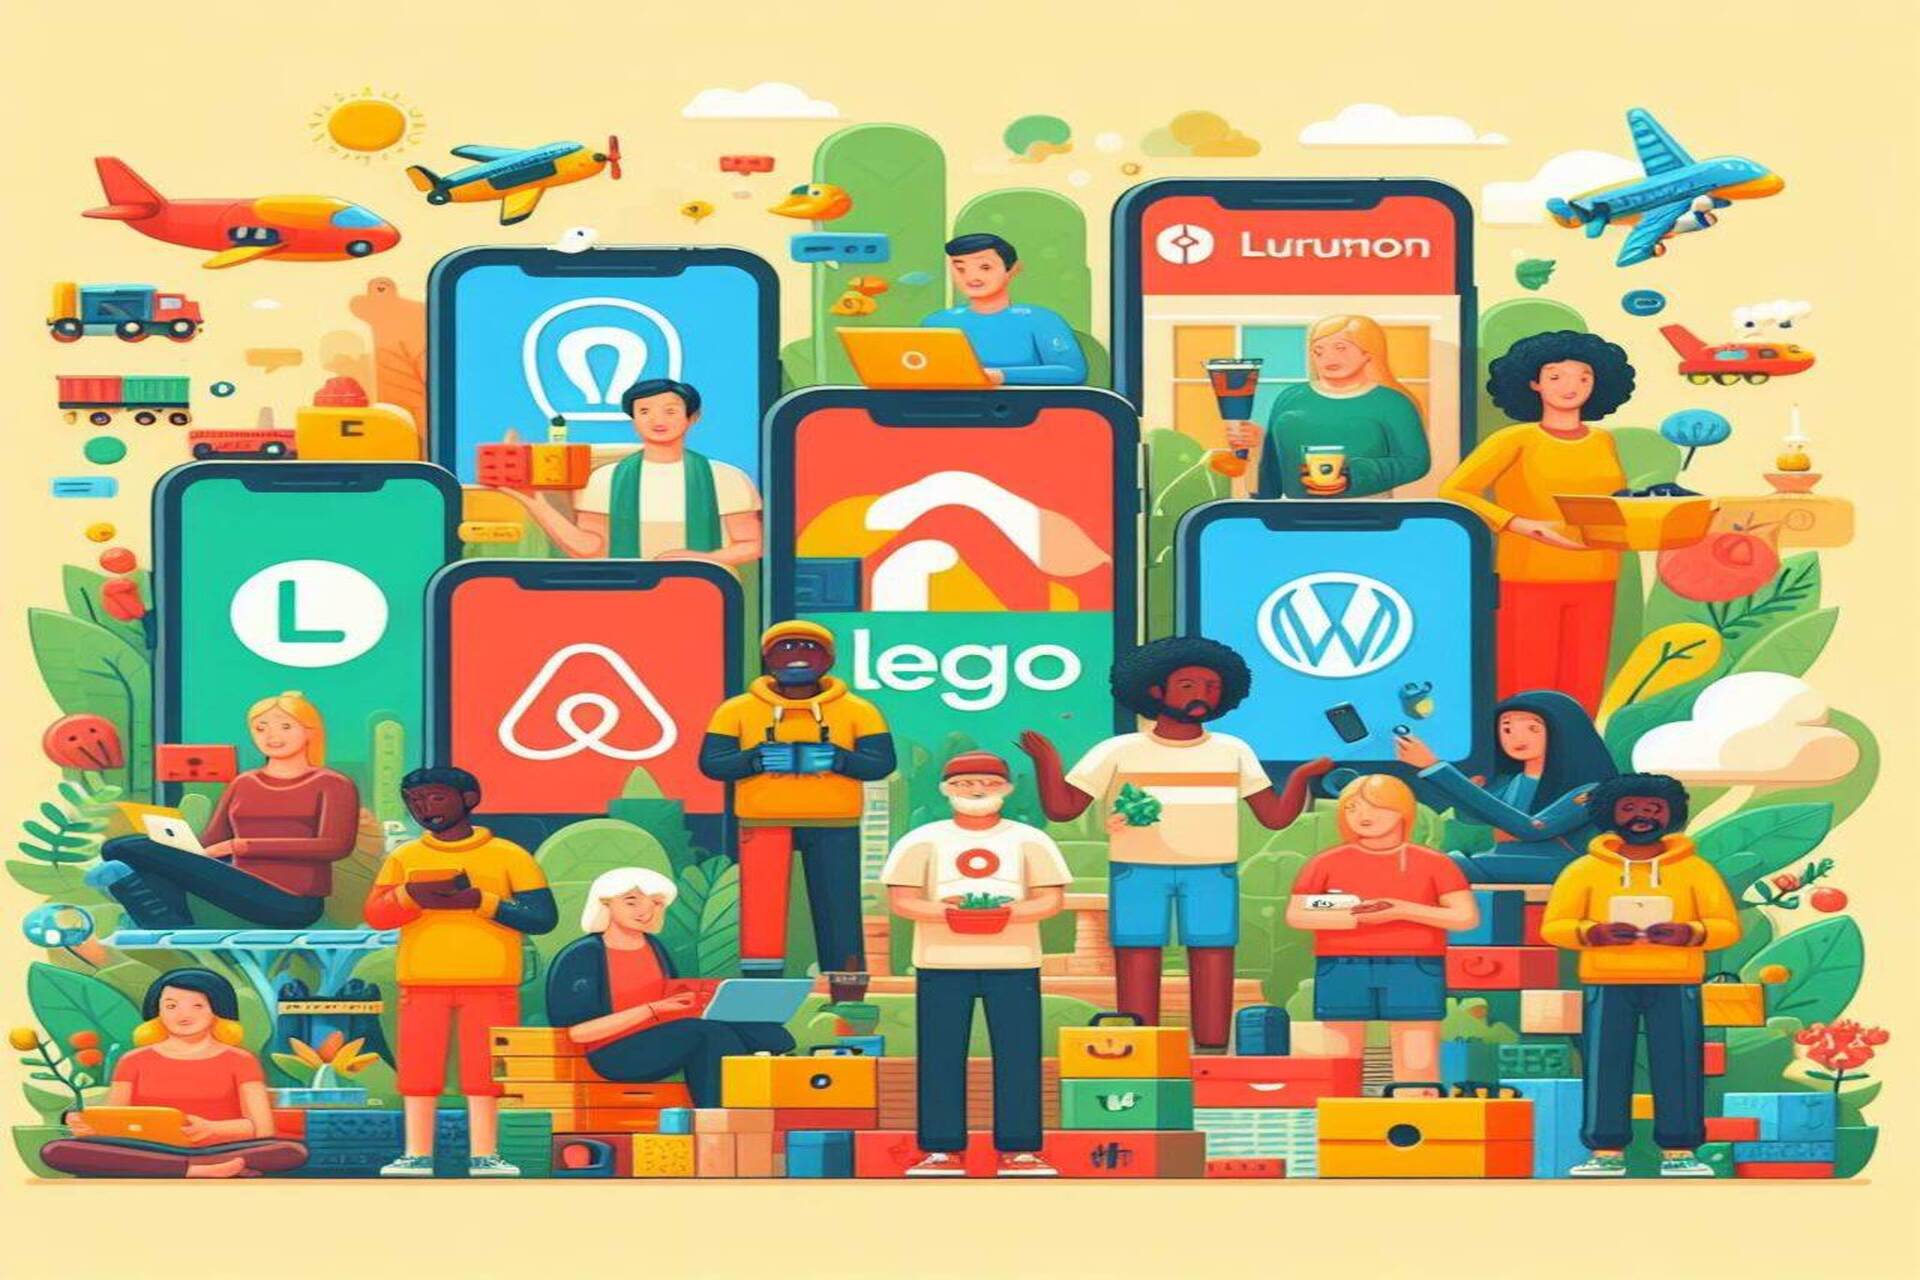 Comunitat i multitud: Airbnb, Etsy, GitHub, Stack Overflow, Lego Ideas, WordPress, Linux i Lululemon són exemples perfectes d'aplicacions "comunàries"